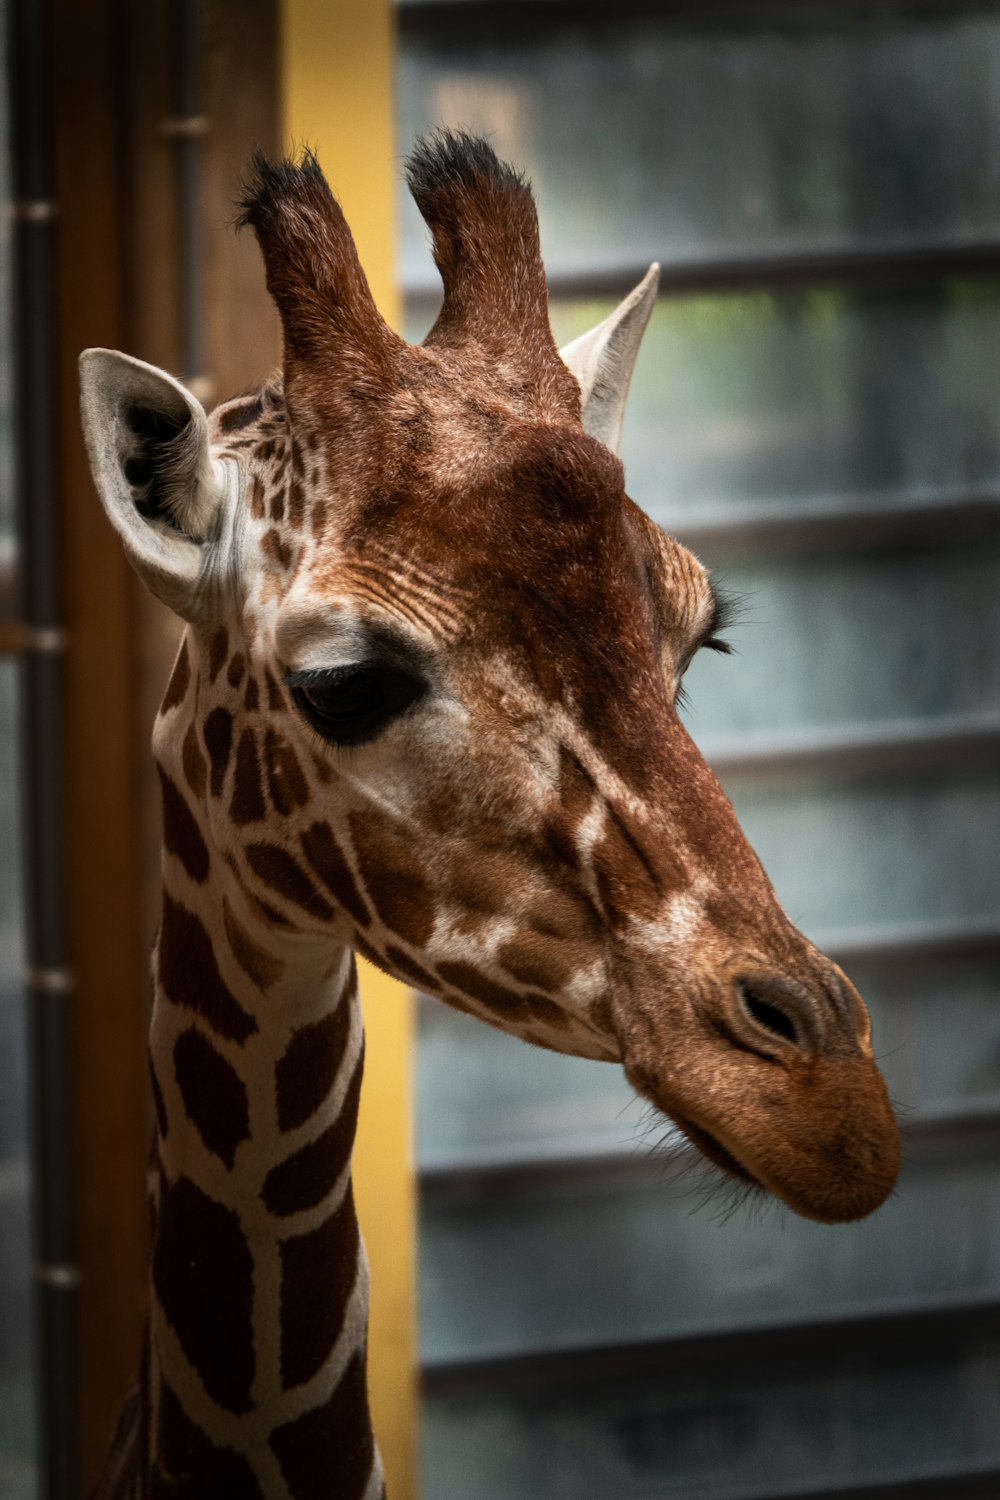 giraffe in cage during daytime